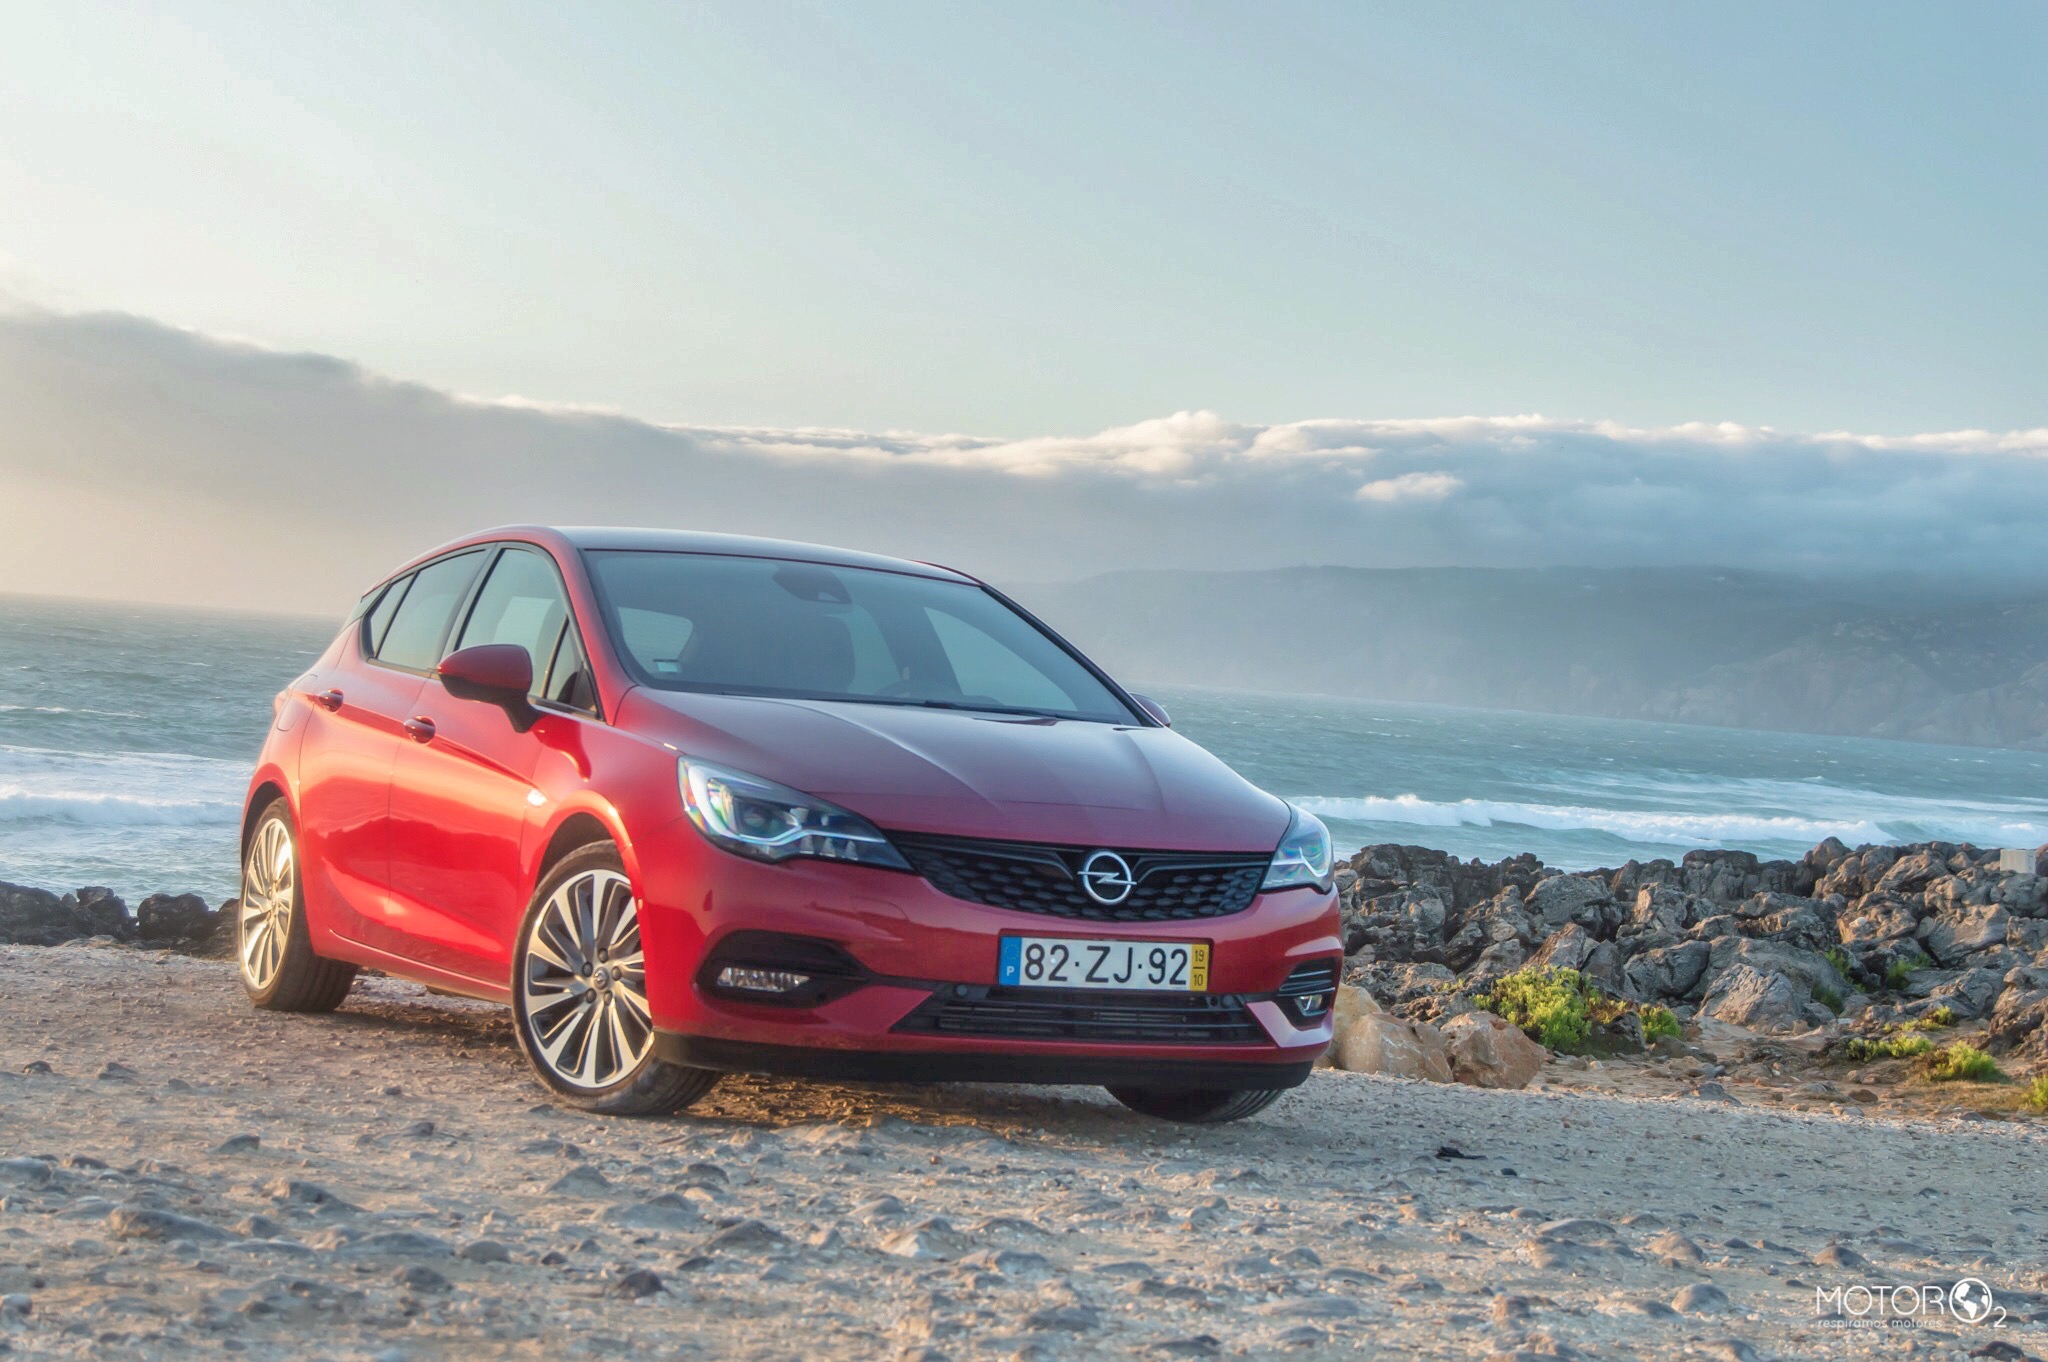 Será o 1.2 Turbo a gasolina, o motor para o Opel Astra?